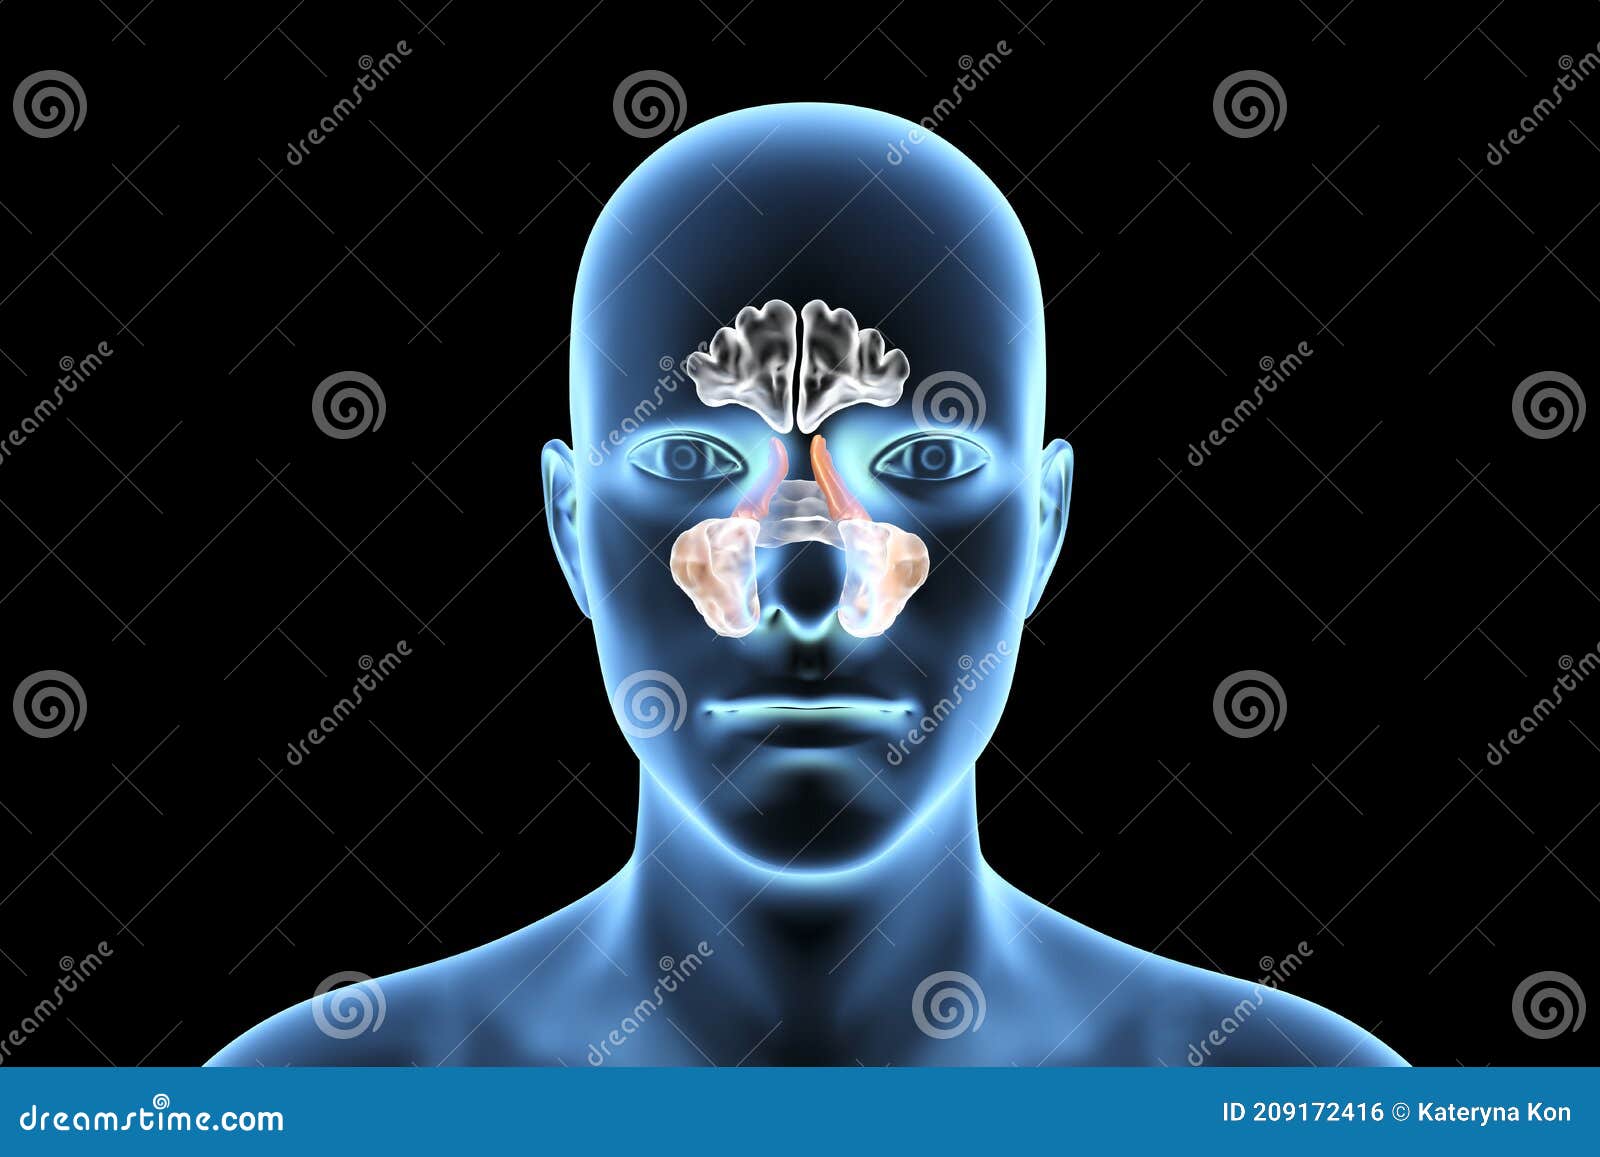 anatomy of paranasal sinuses